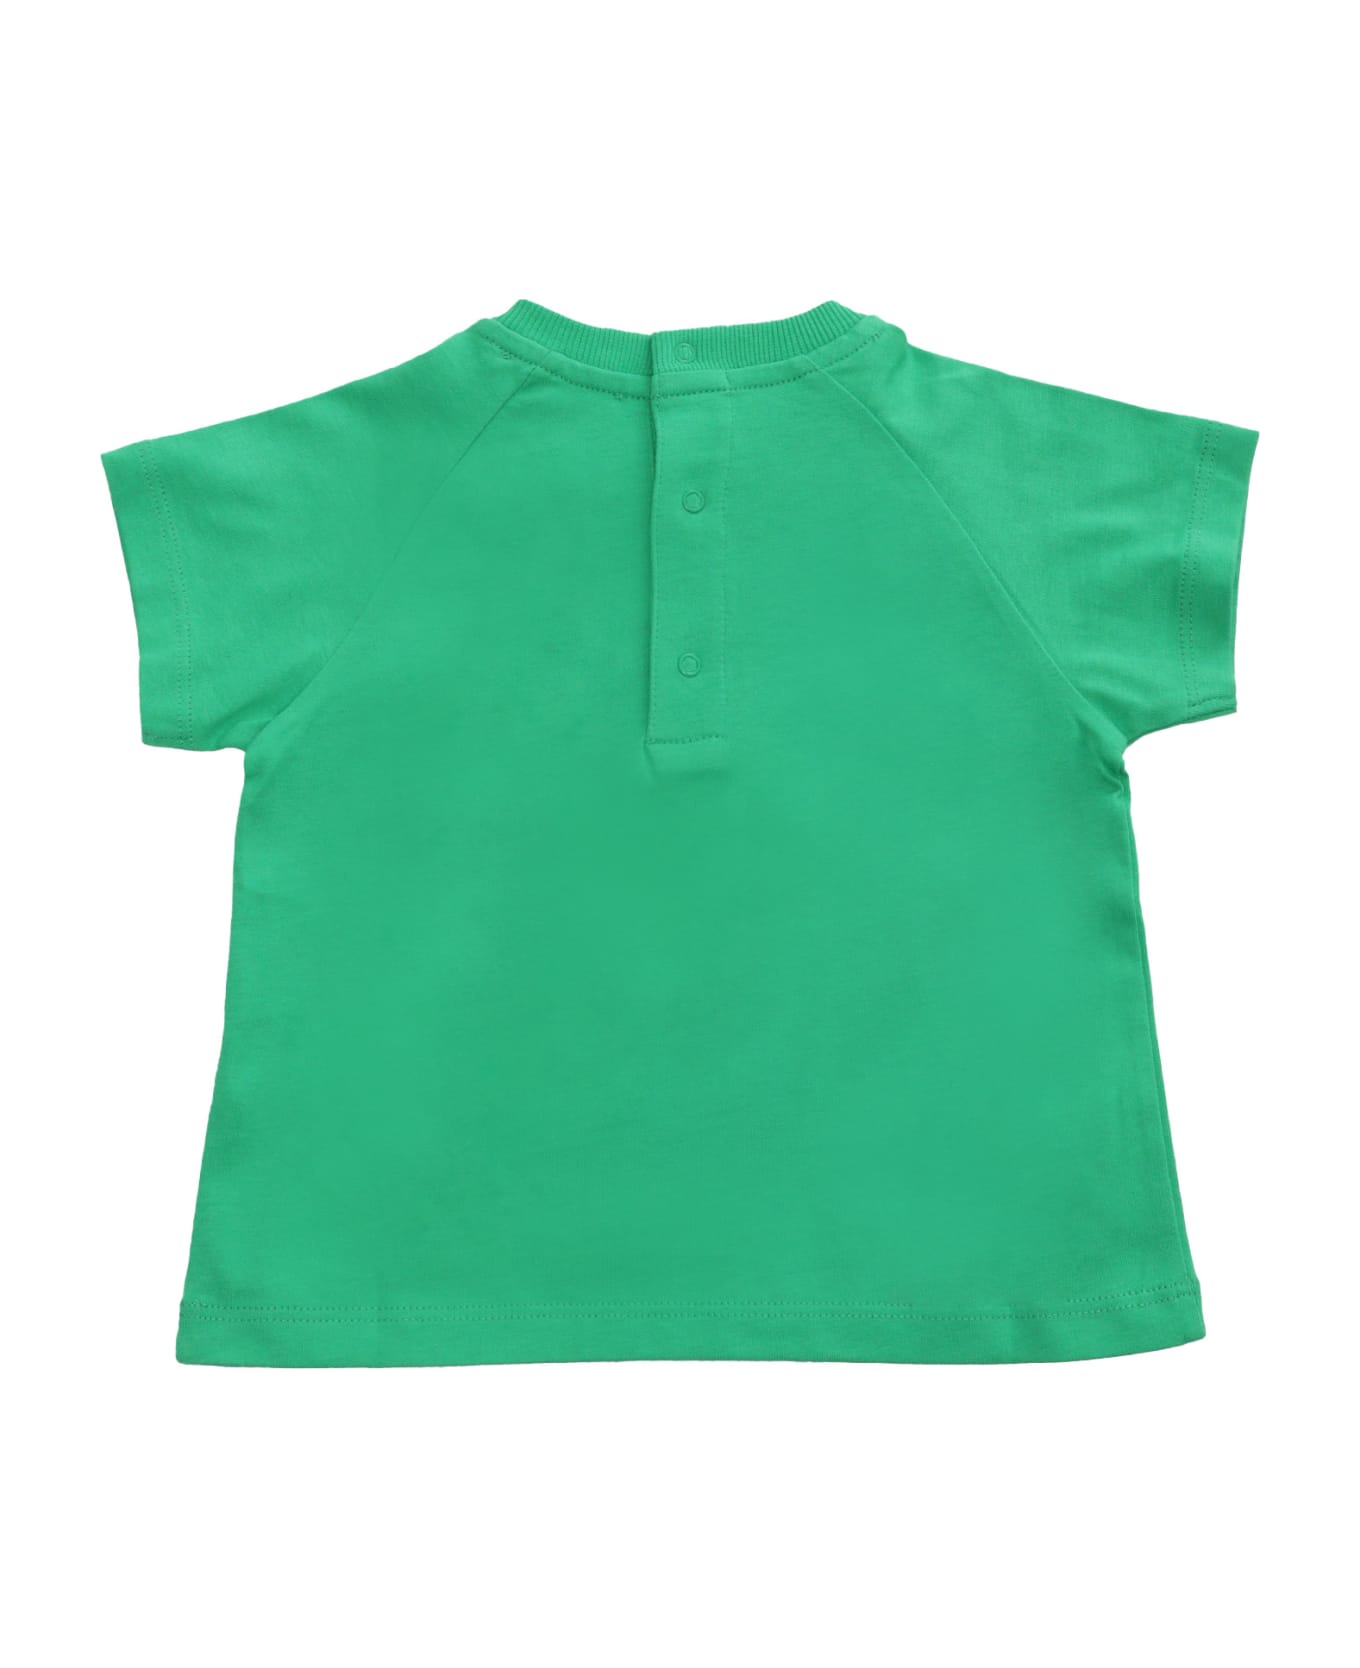 Moschino Green T-shirt With Logo - GREEN